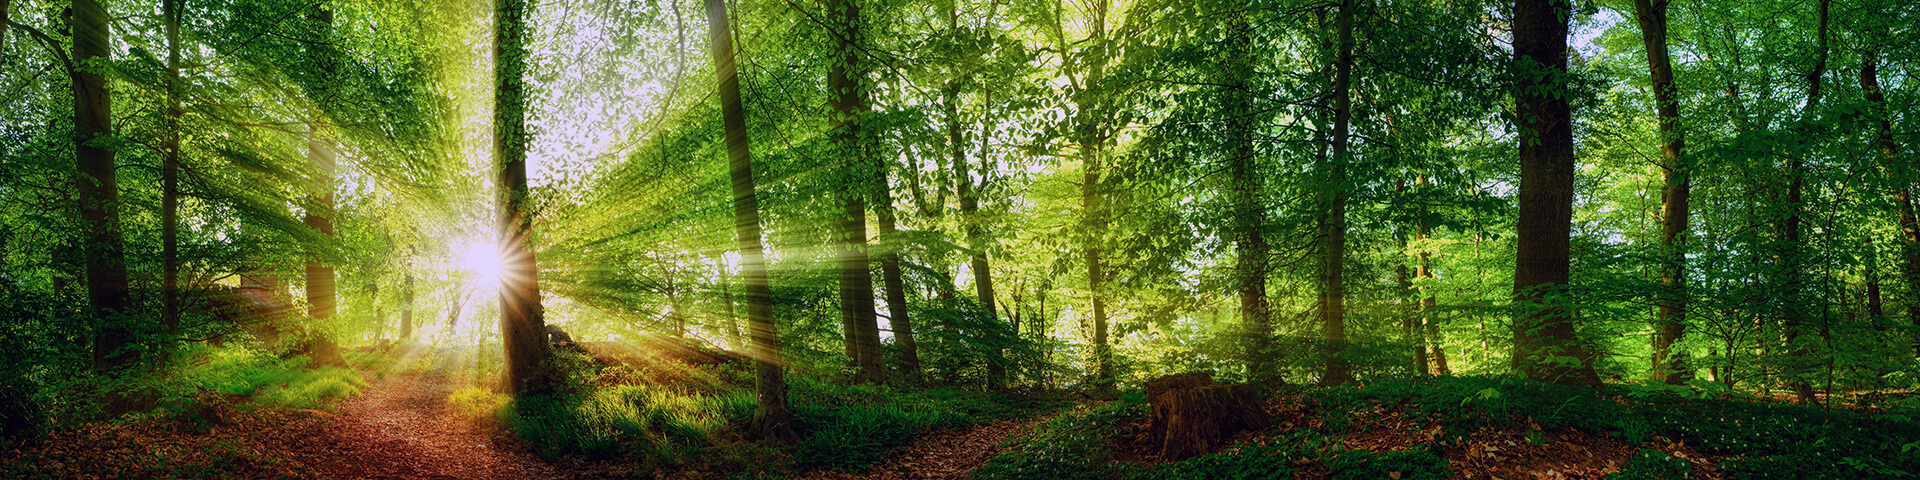 anytime-forest-banner-desktop